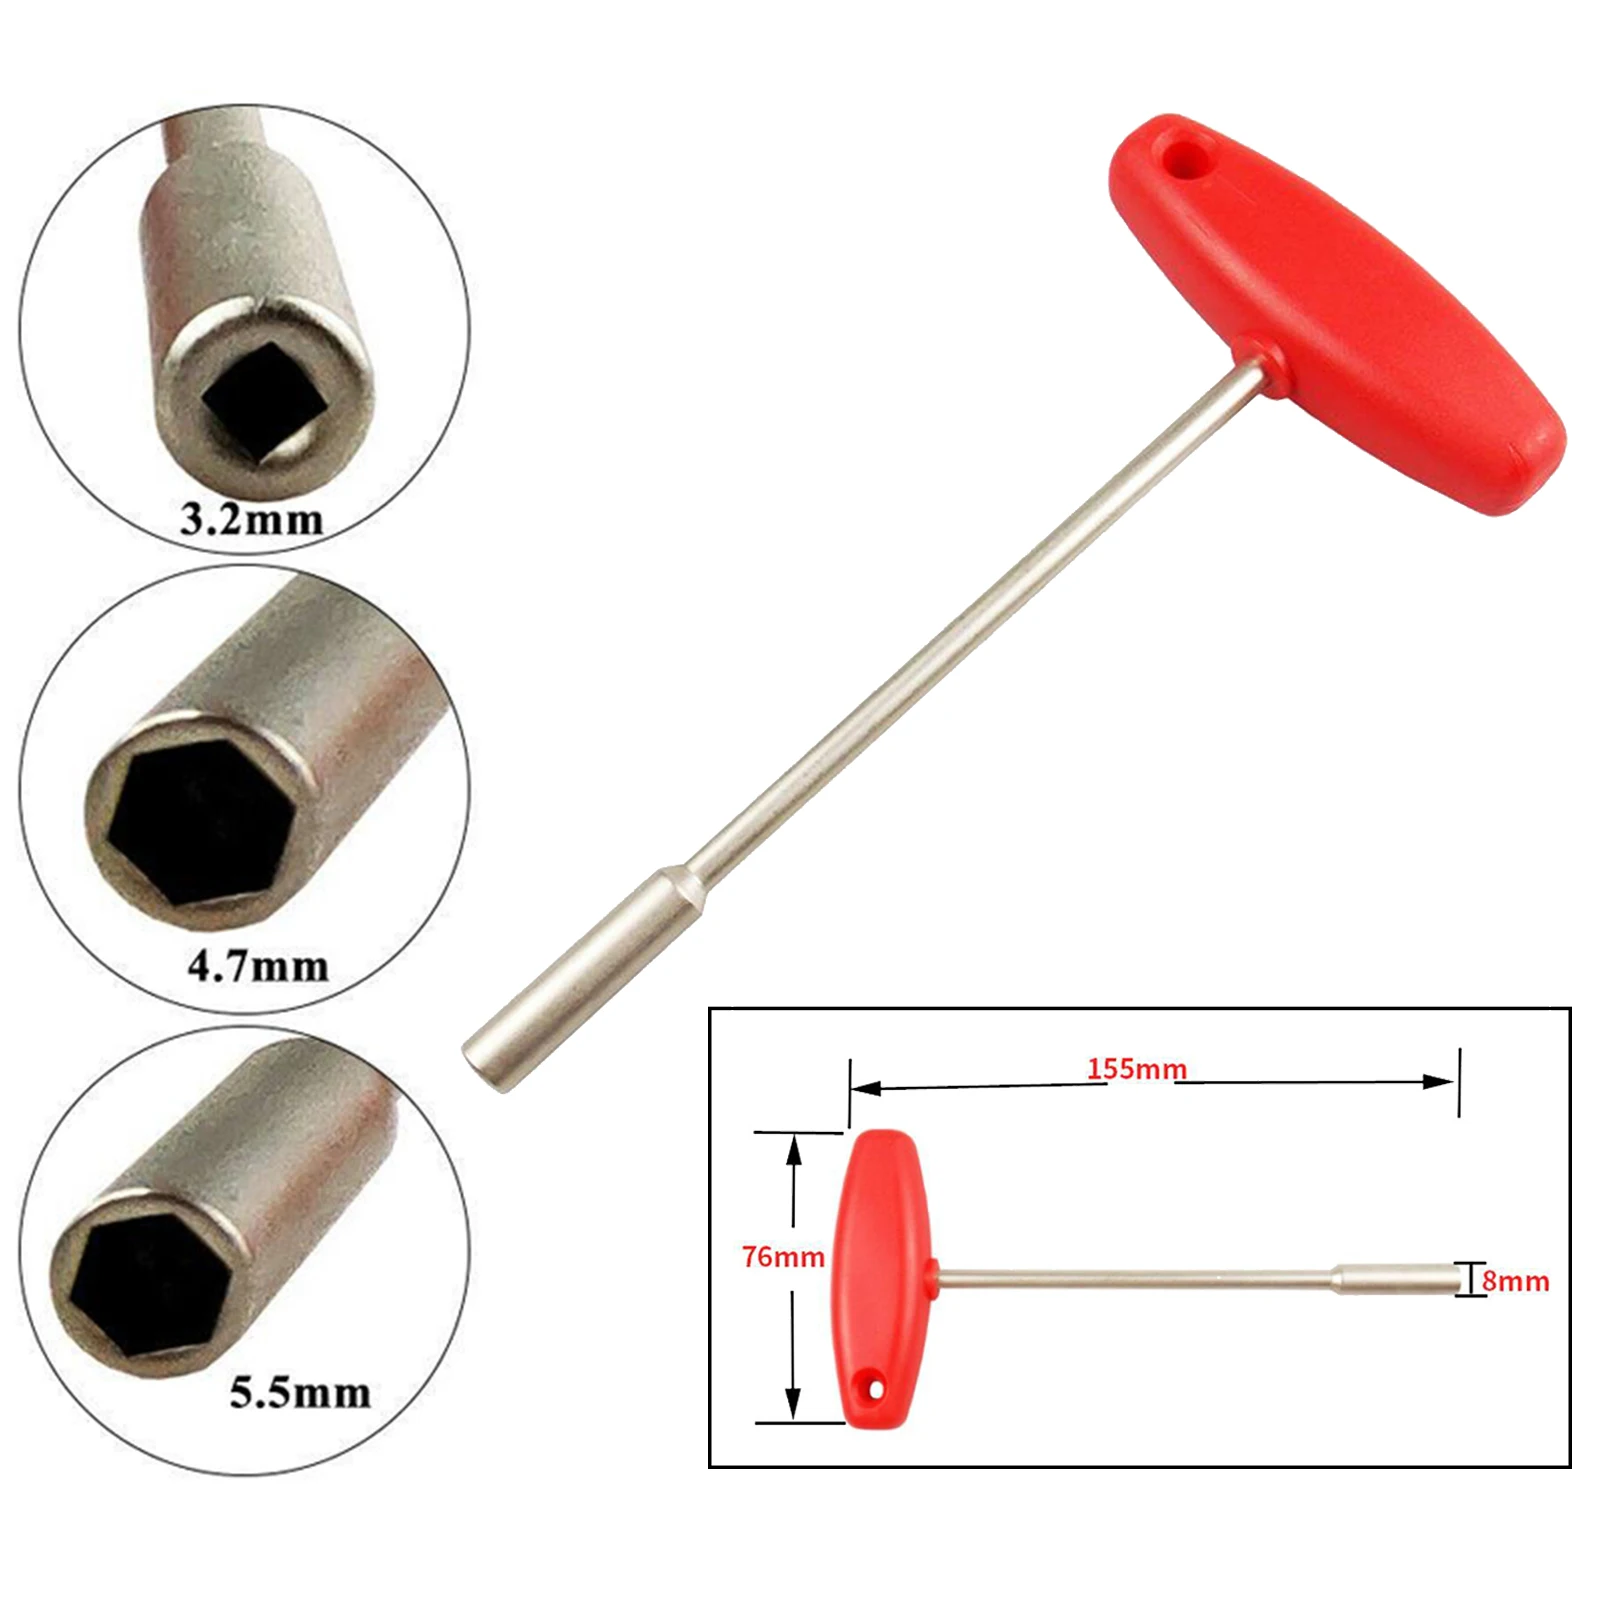 Square 3.2mm/ Hex Socket 4.7mm/5.5mm Nipple Tool Spoke Spanner Cap Wrench to fit Internal Spoke Nipples Tools